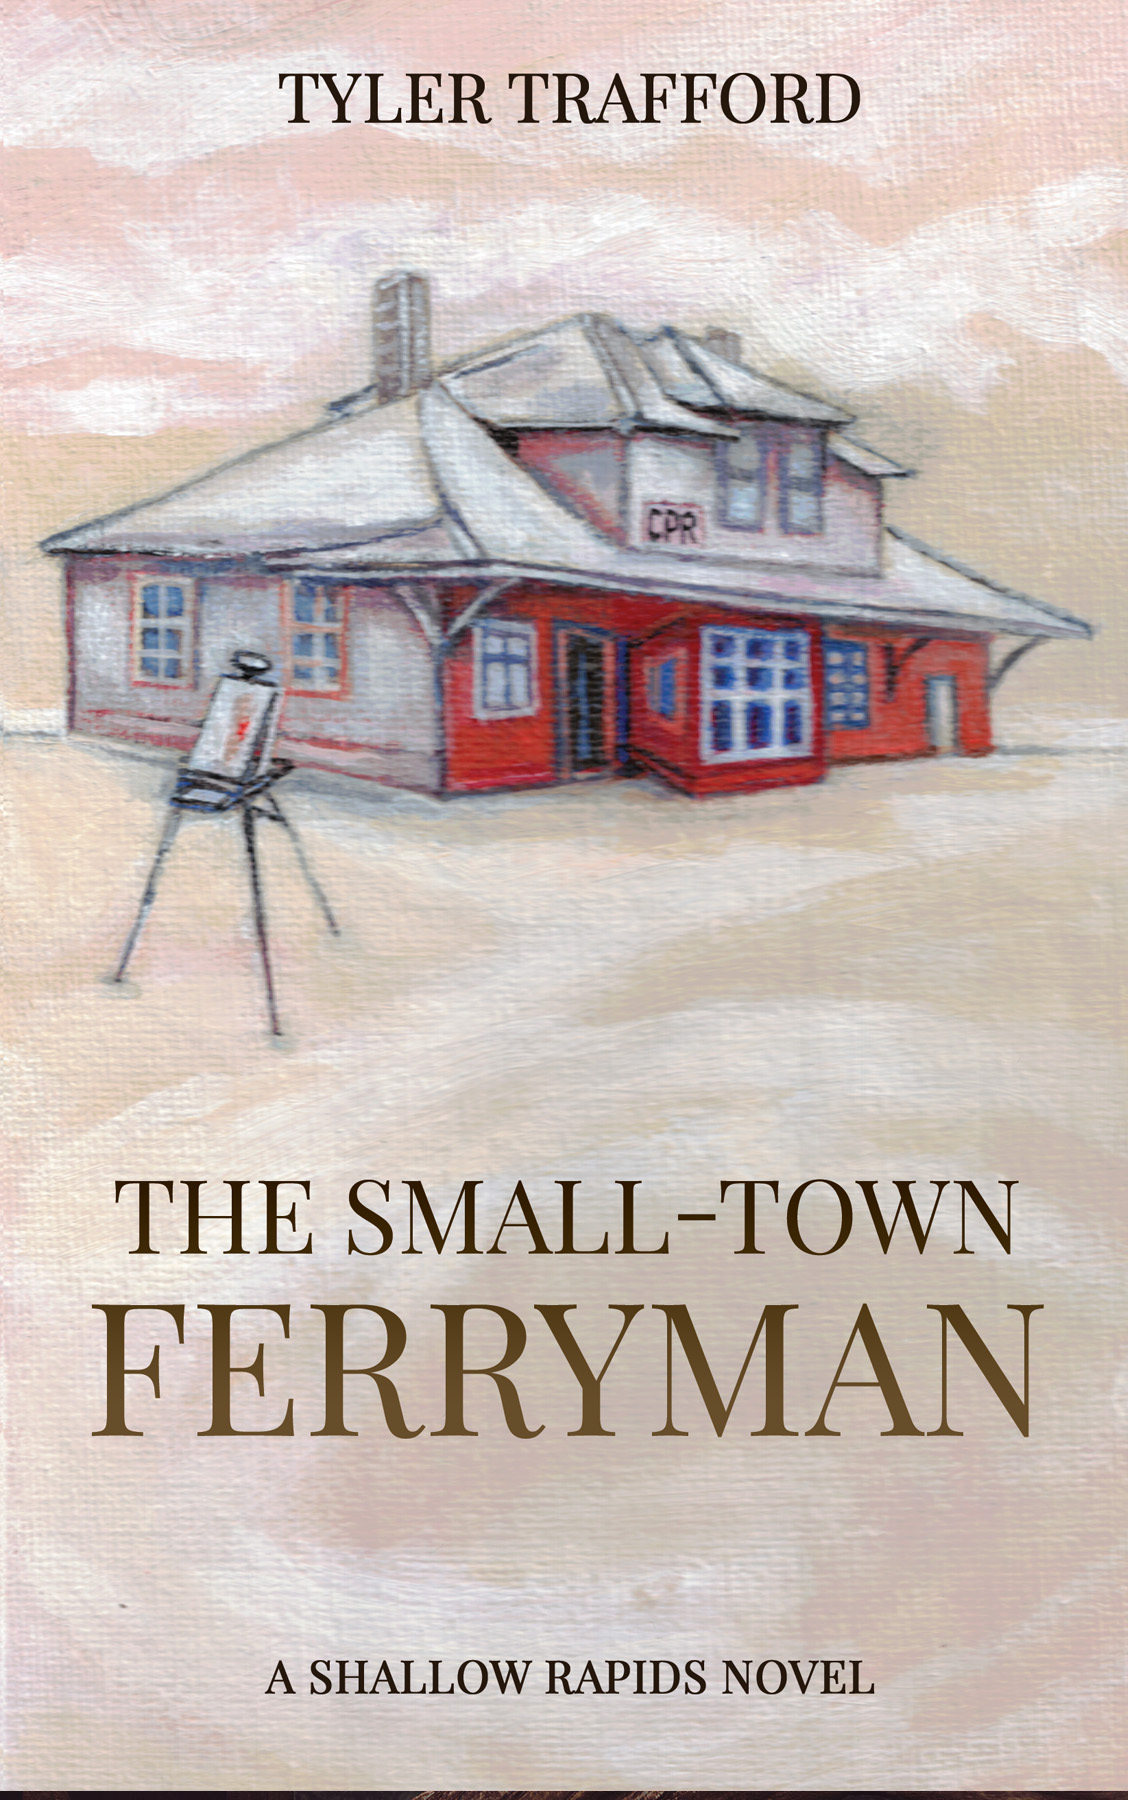 The Small-Town Ferryman: A Shallow Rapids Novel